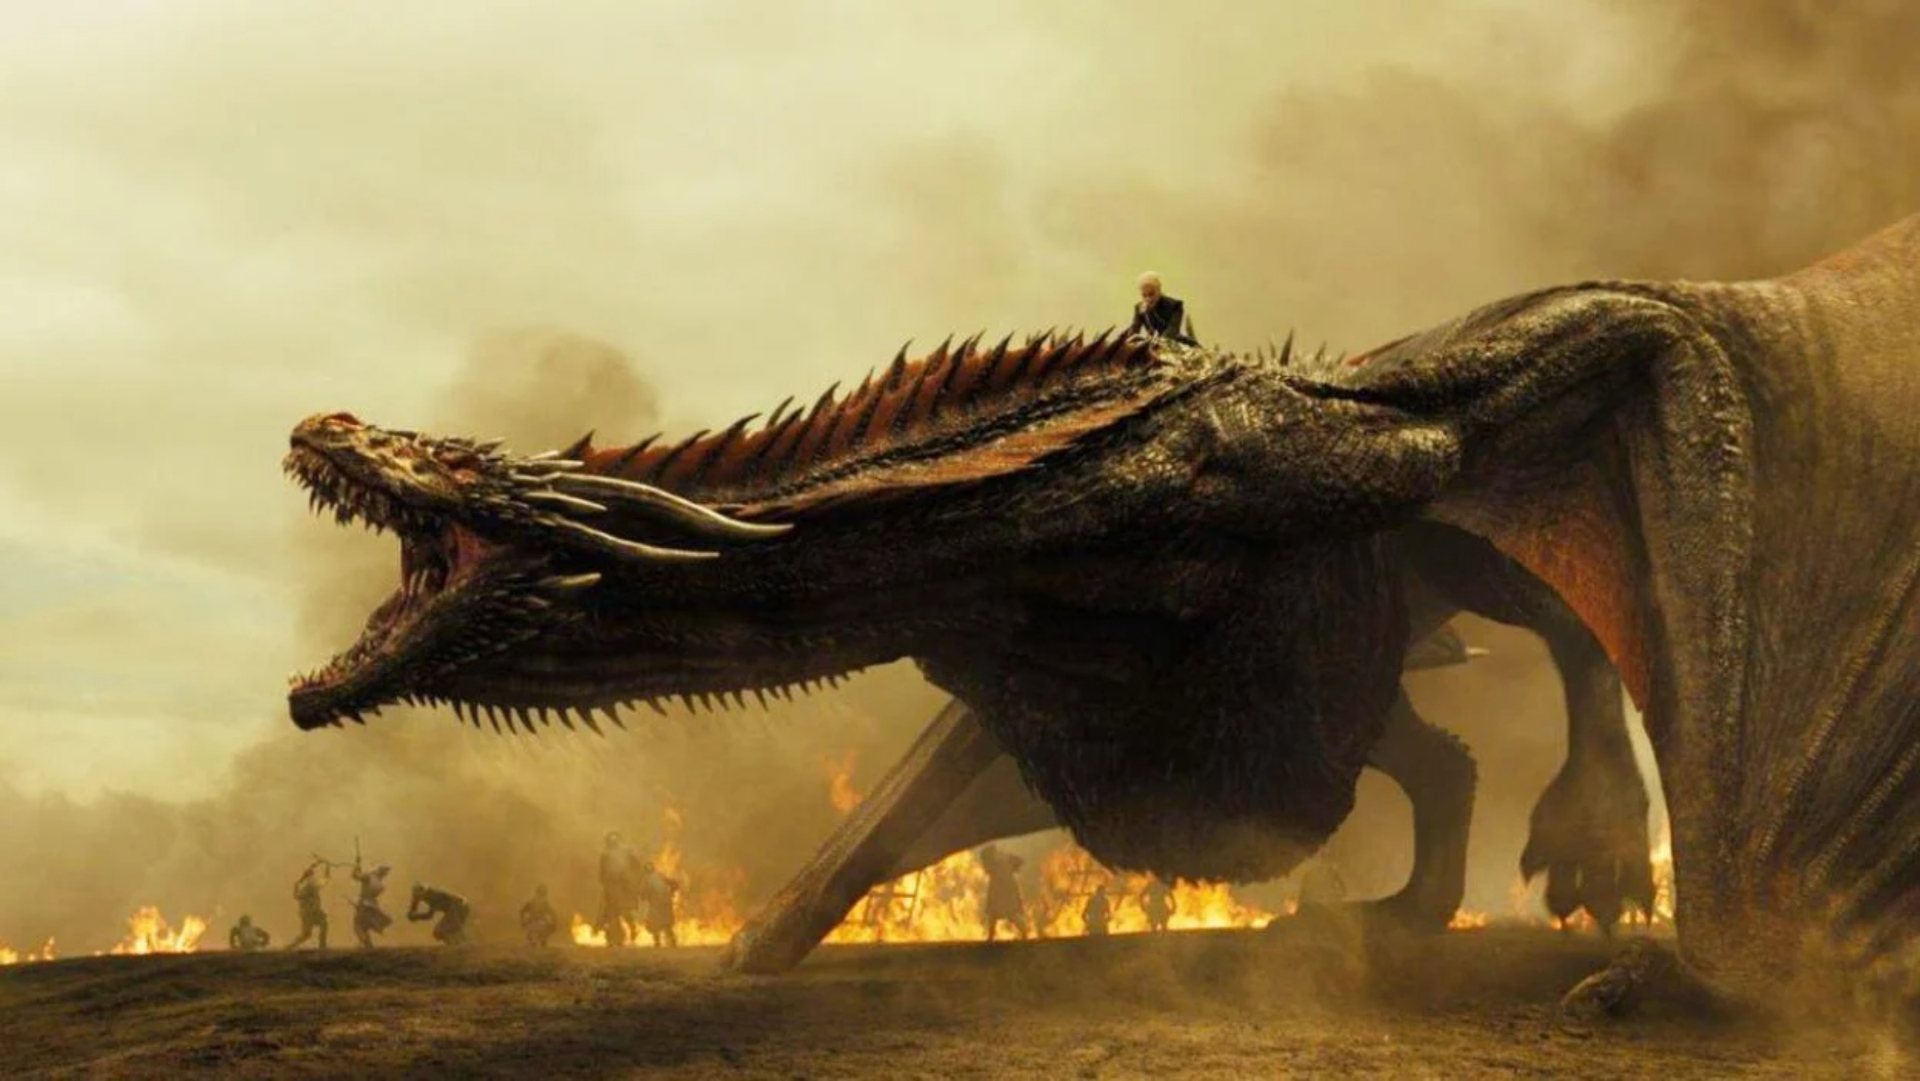 Dragon City: 7 strategies to become the next Daenerys Targaryen - Softonic